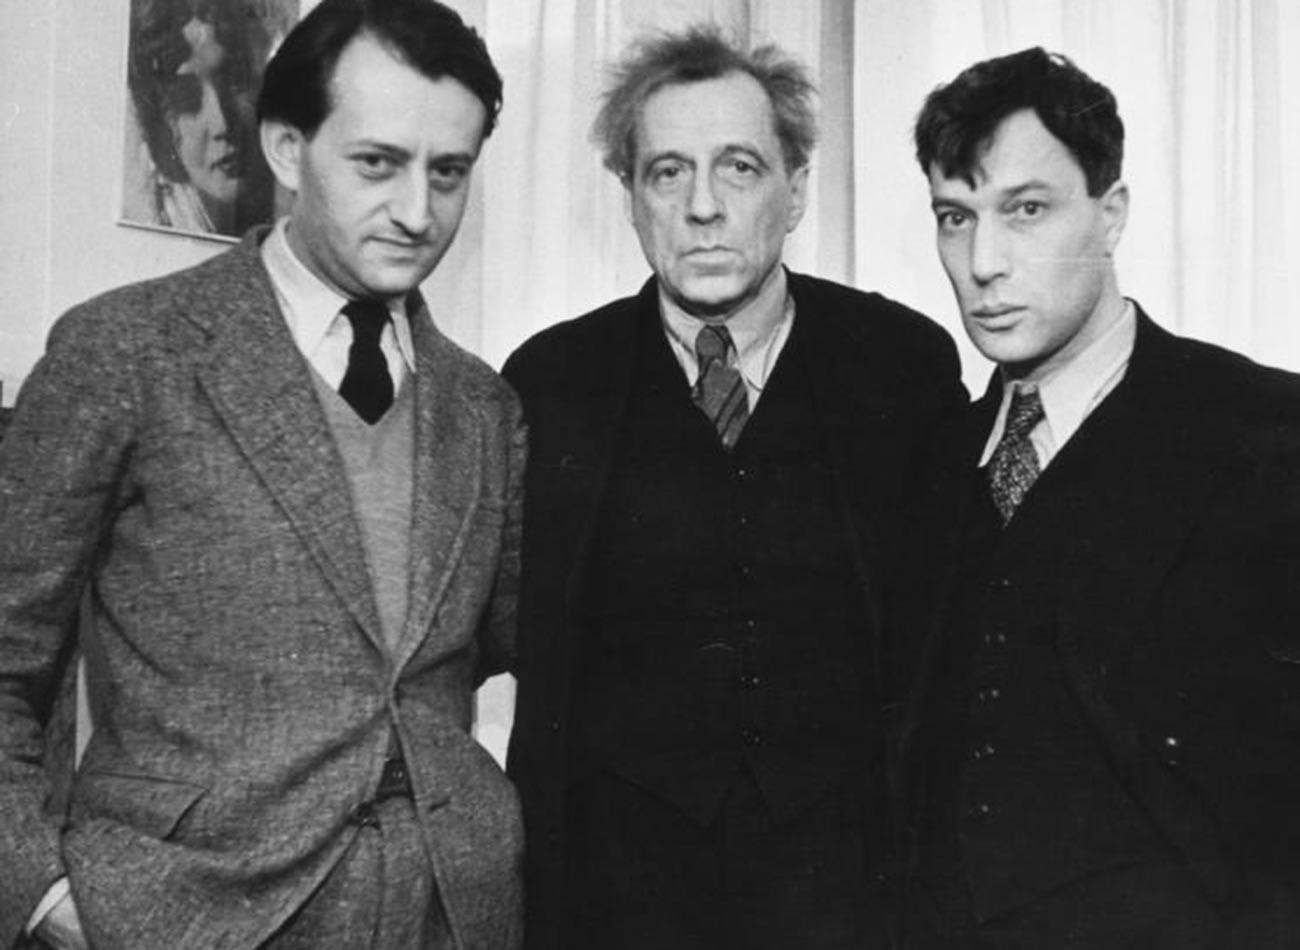 From left to right: André Malraux, Vsevolod Meyerhold, Boris Pasternak